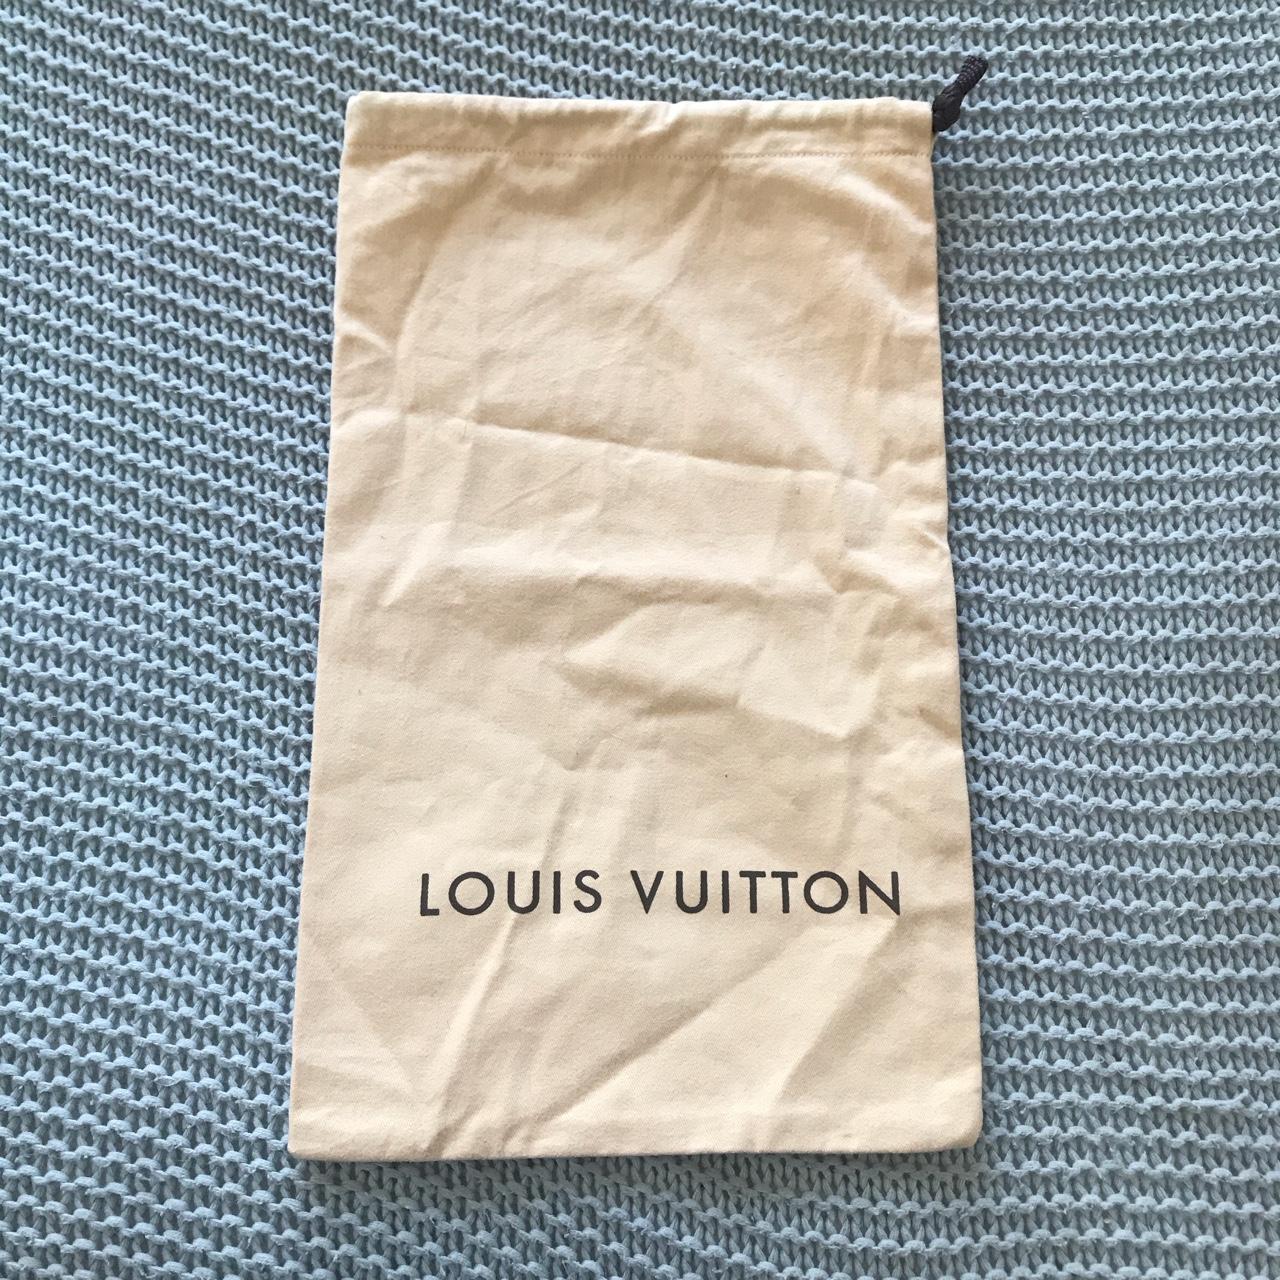 louis vuitton dust bag , 9.25 x 15.75 inches, no flaws